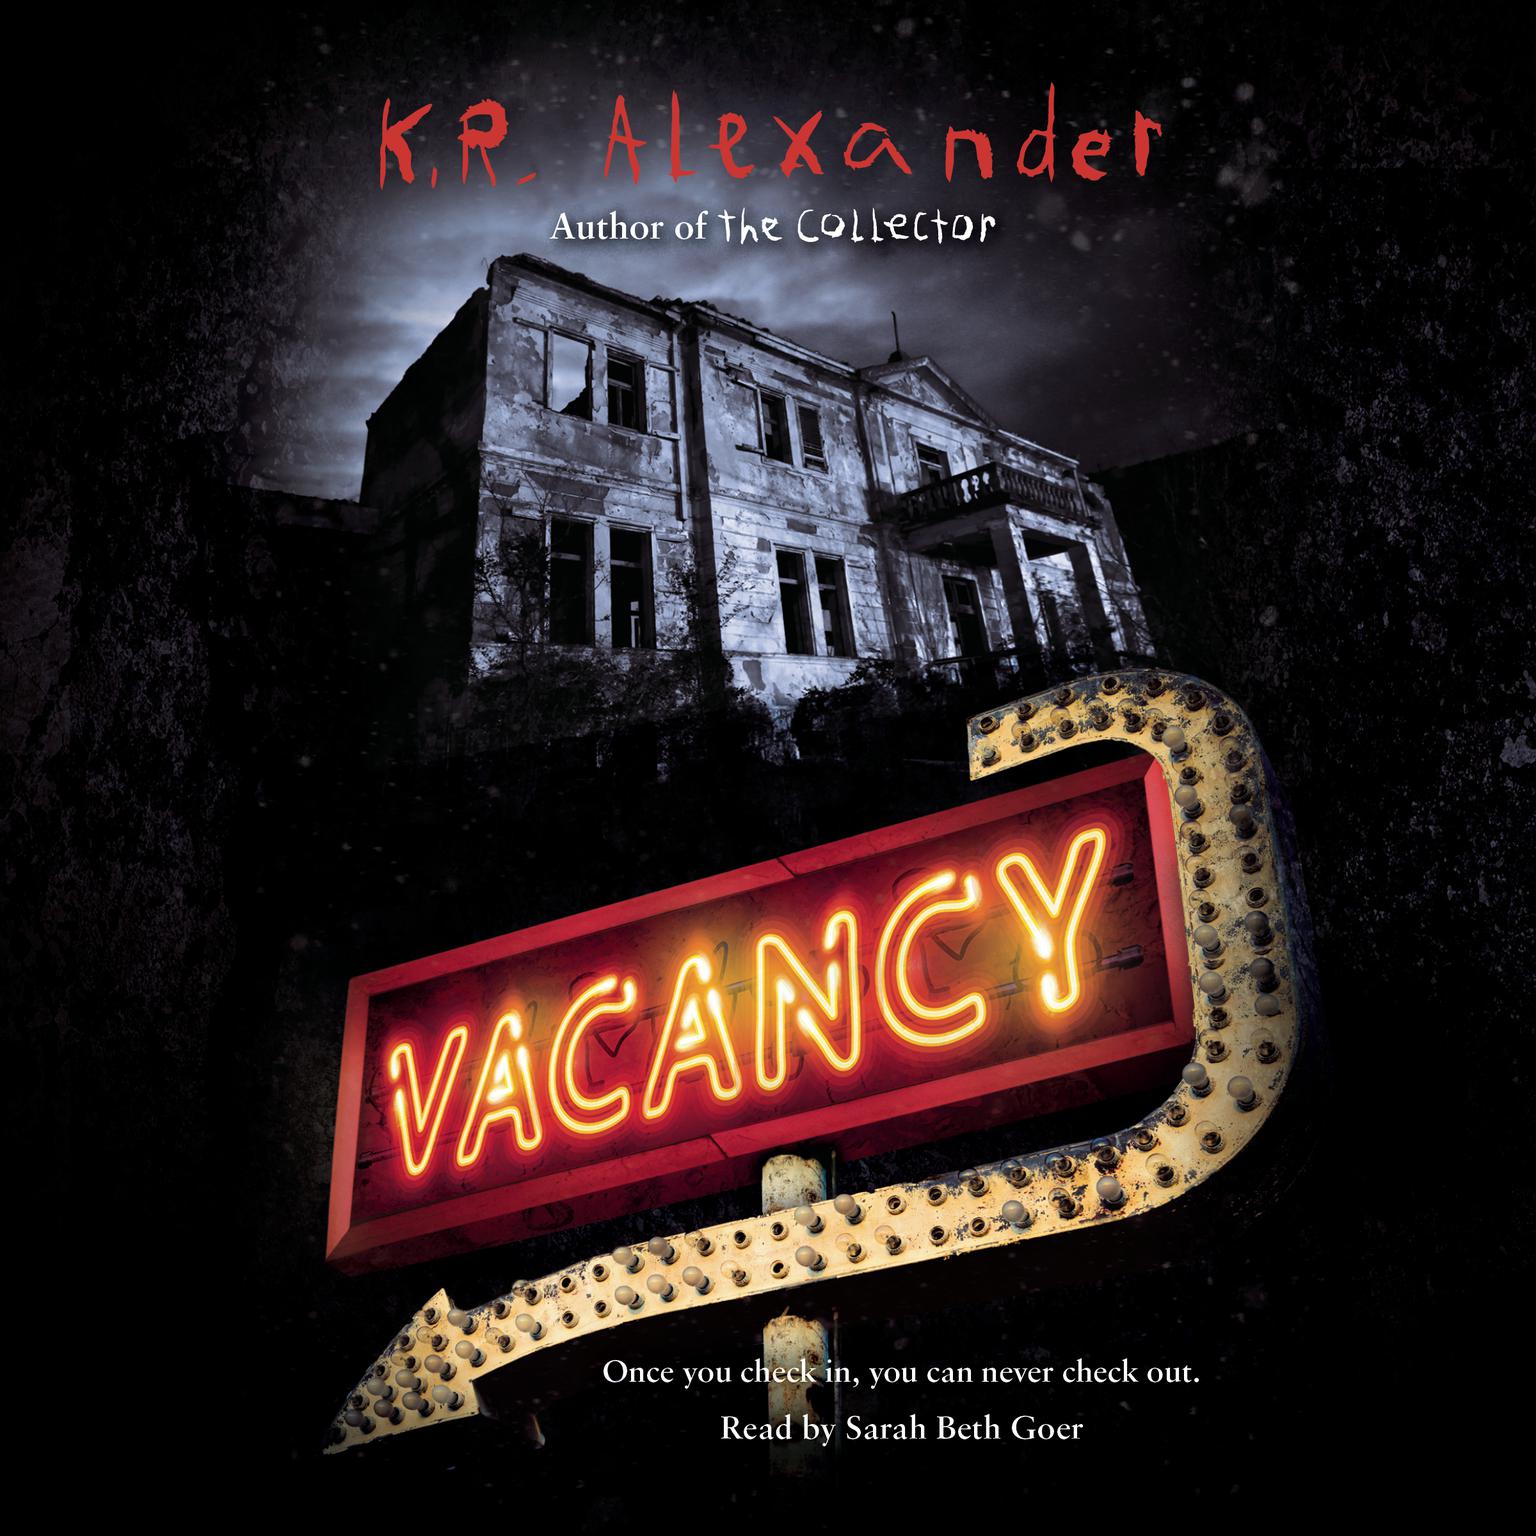 Vacancy Audiobook, by K. R. Alexander